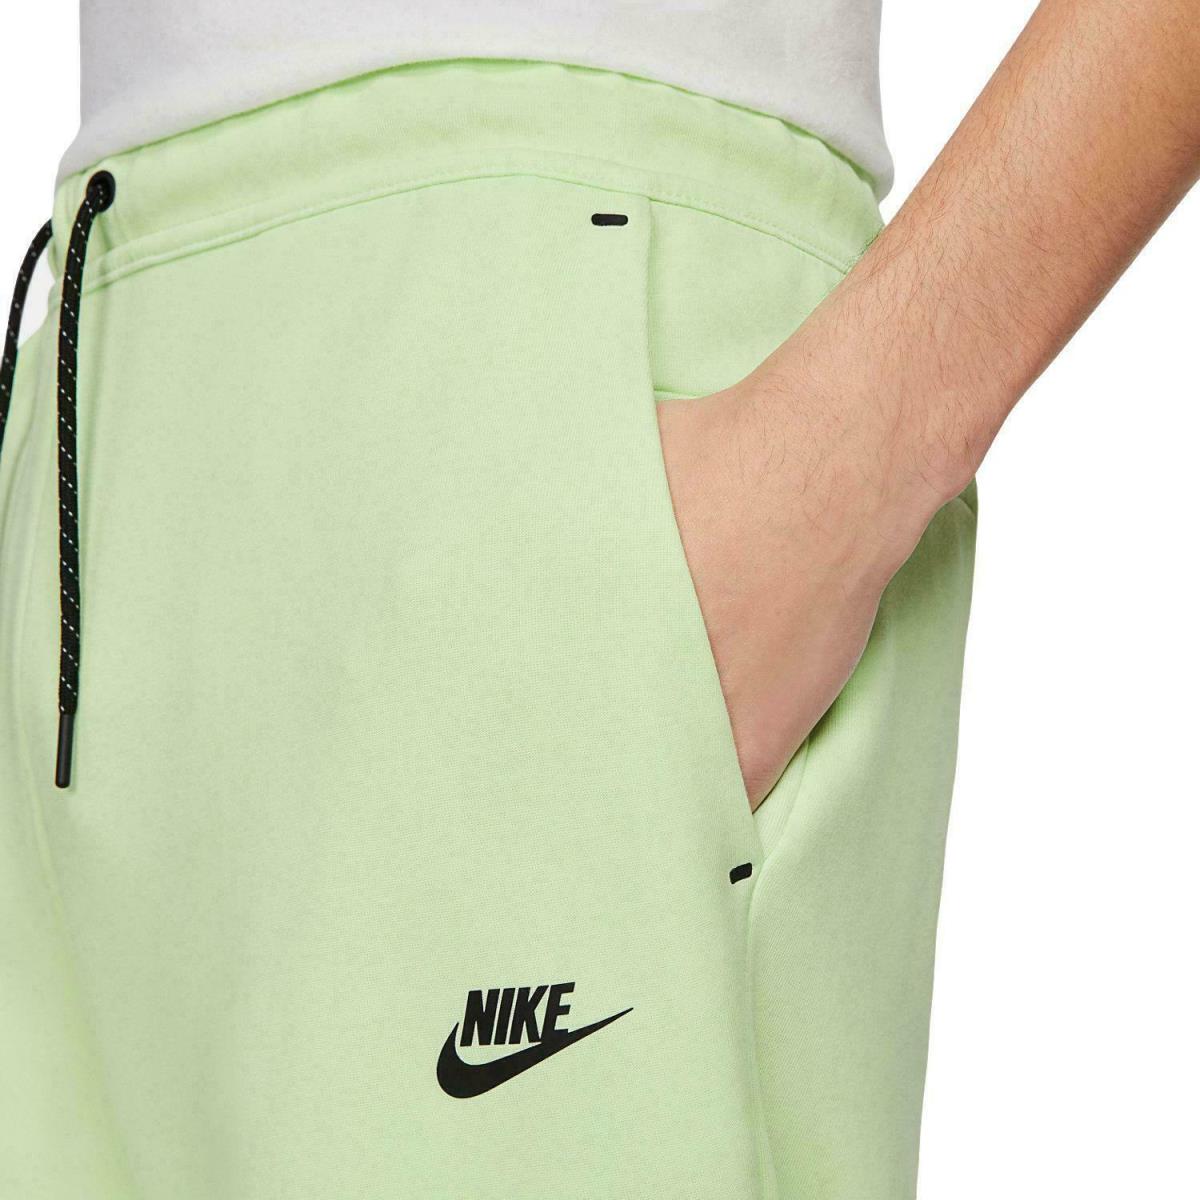 Nike clothing Sportswear - Green 1